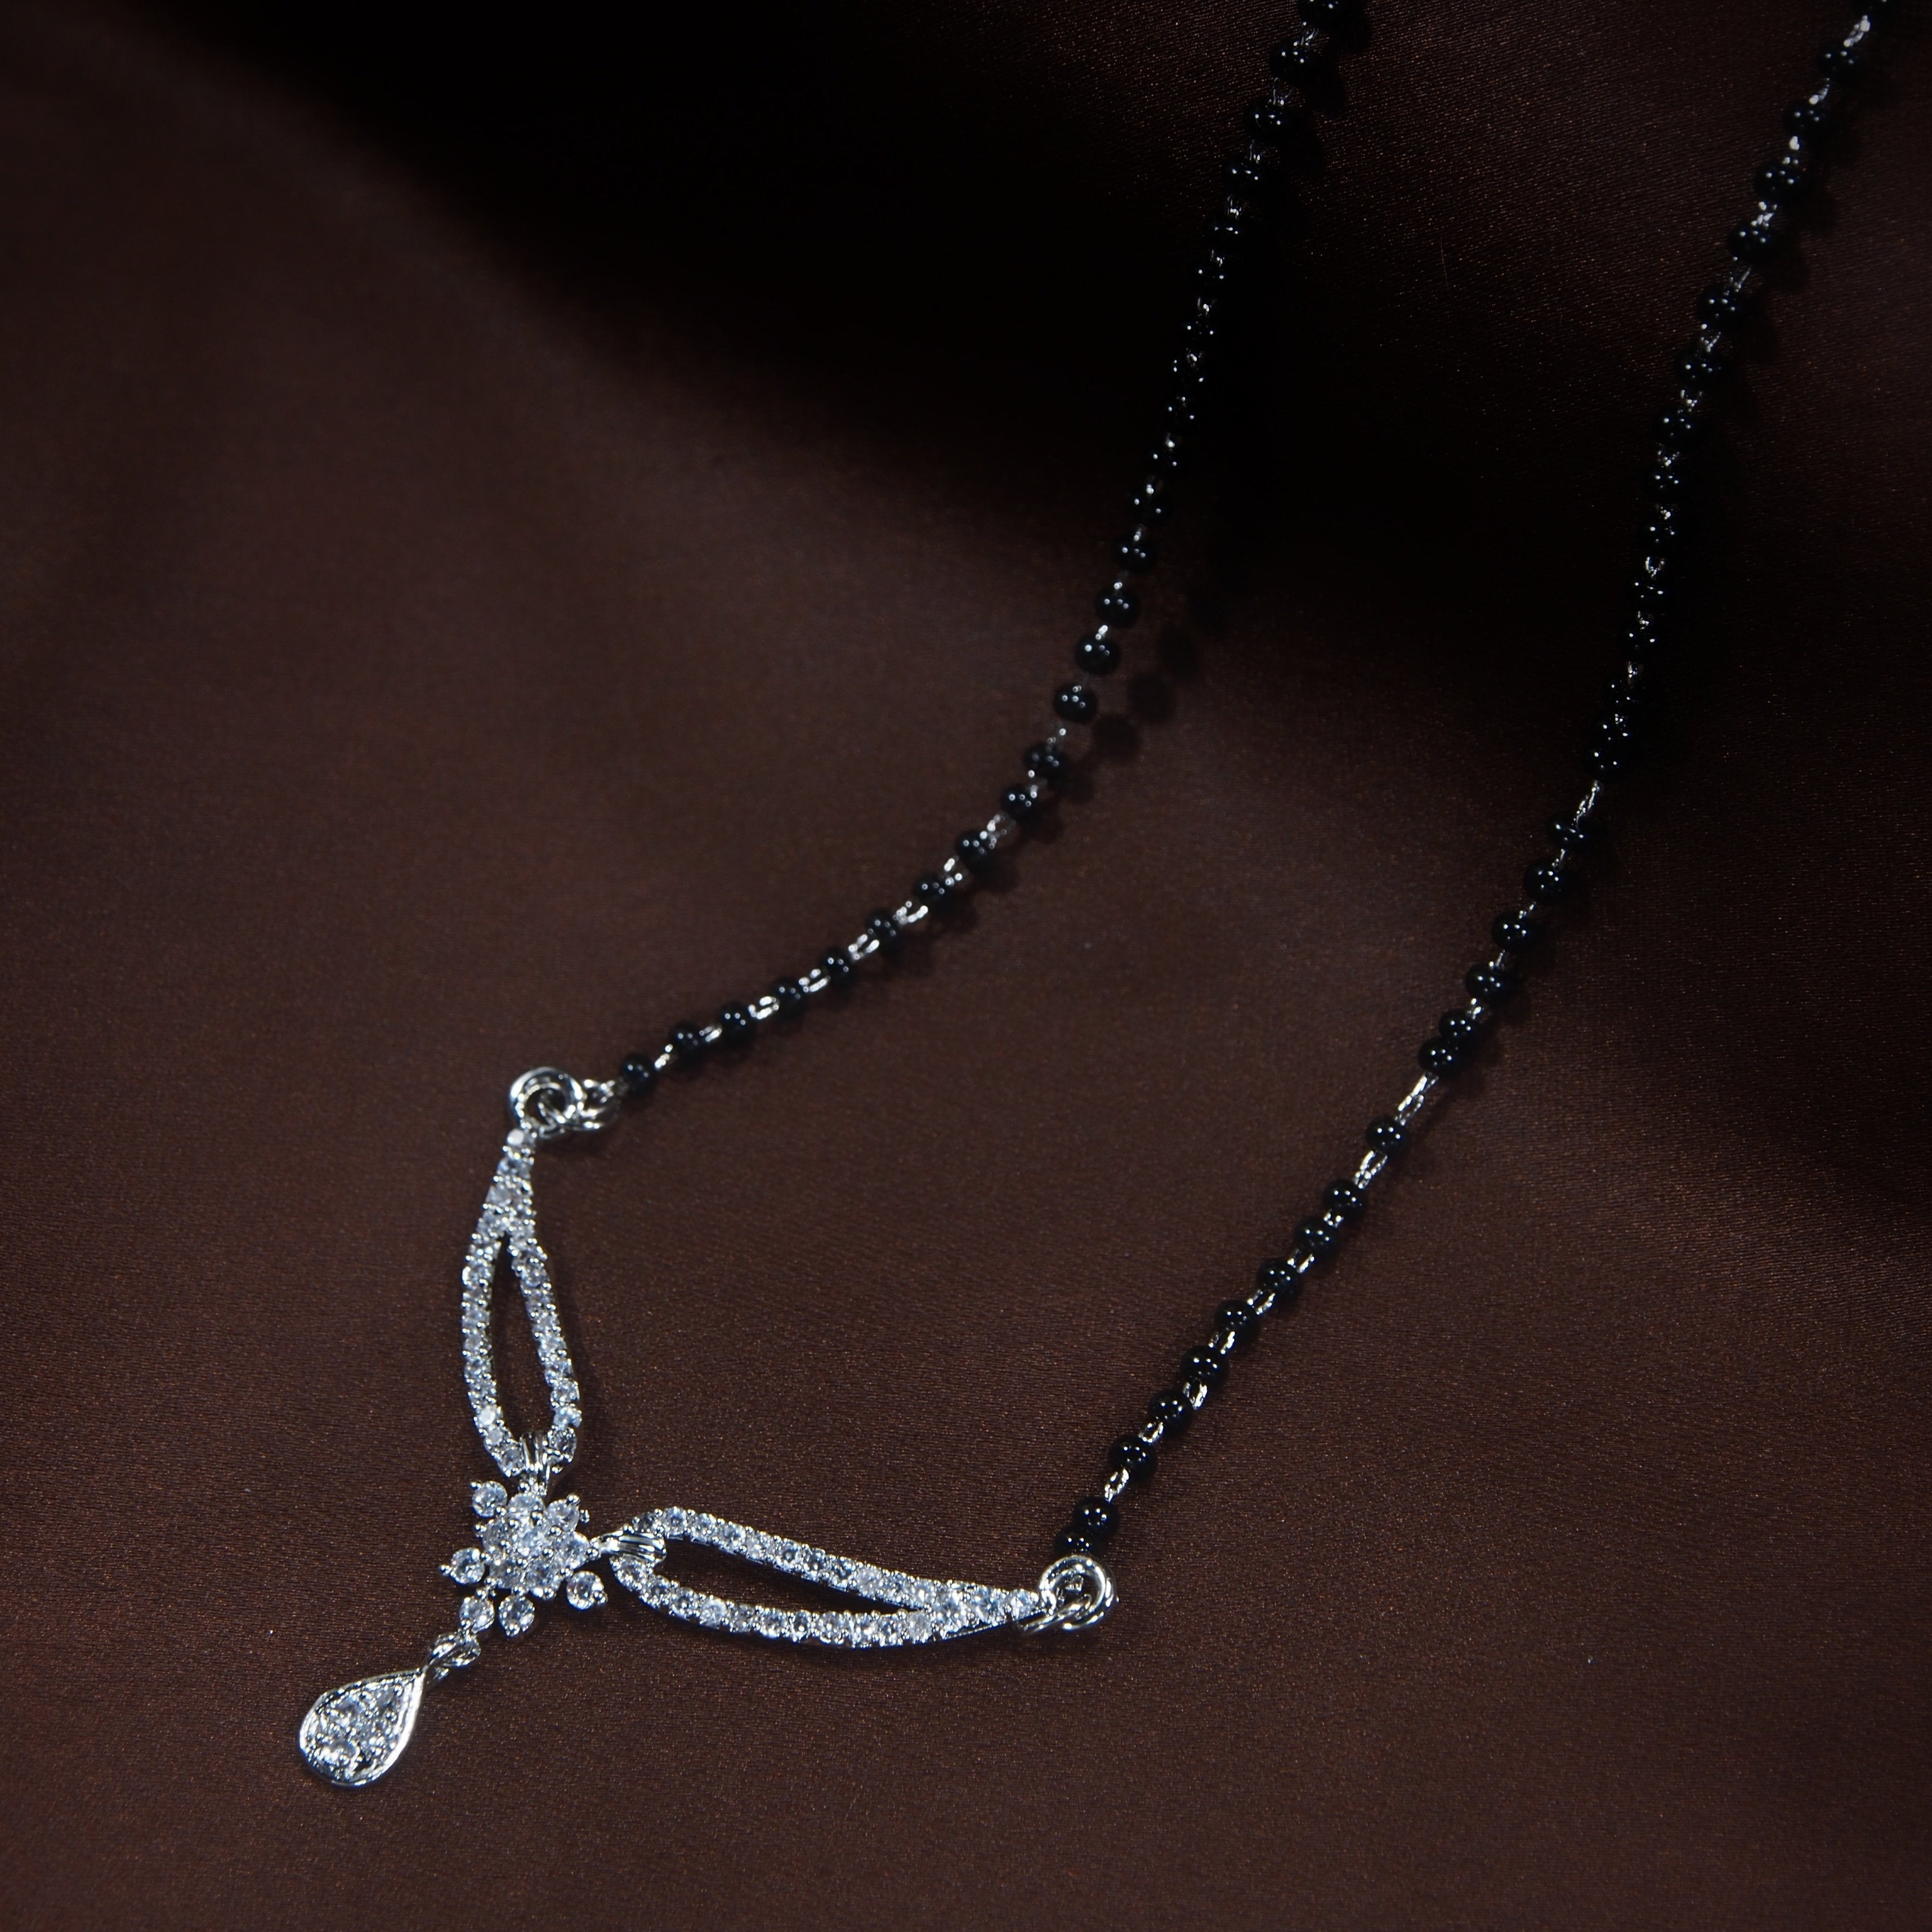 Women's 18k Rhodium Plated Pendant with Black Bead Chain Mangalsutra - I Jewels